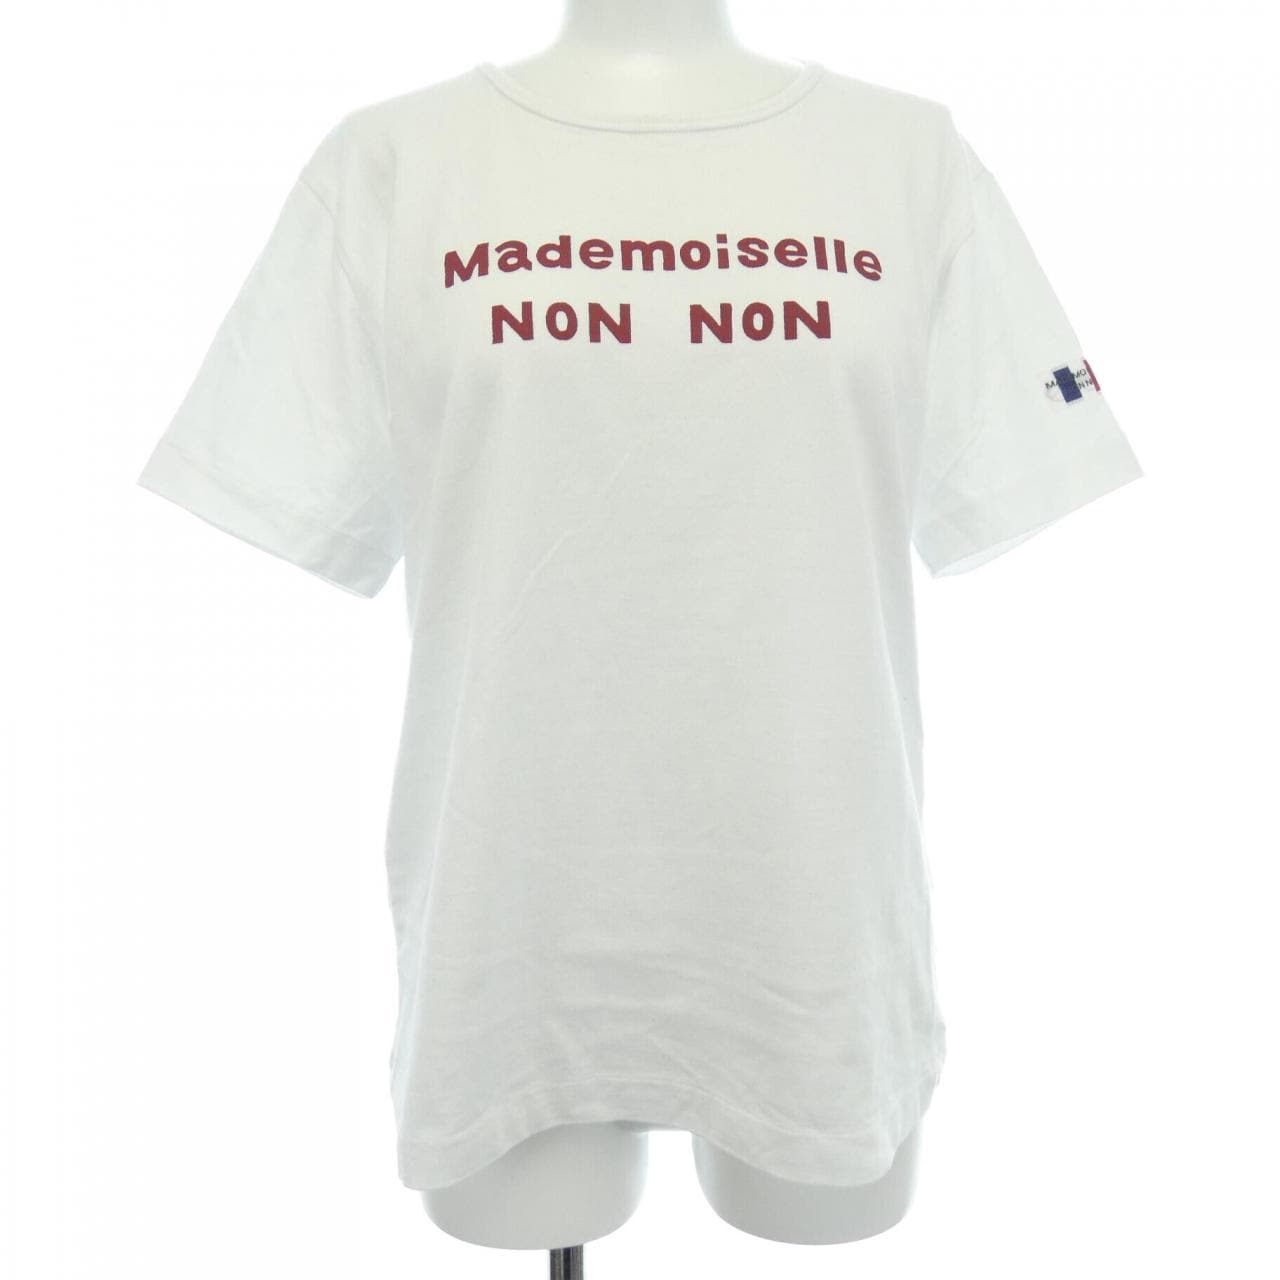 Mademoiselle Nonnon T-shirt